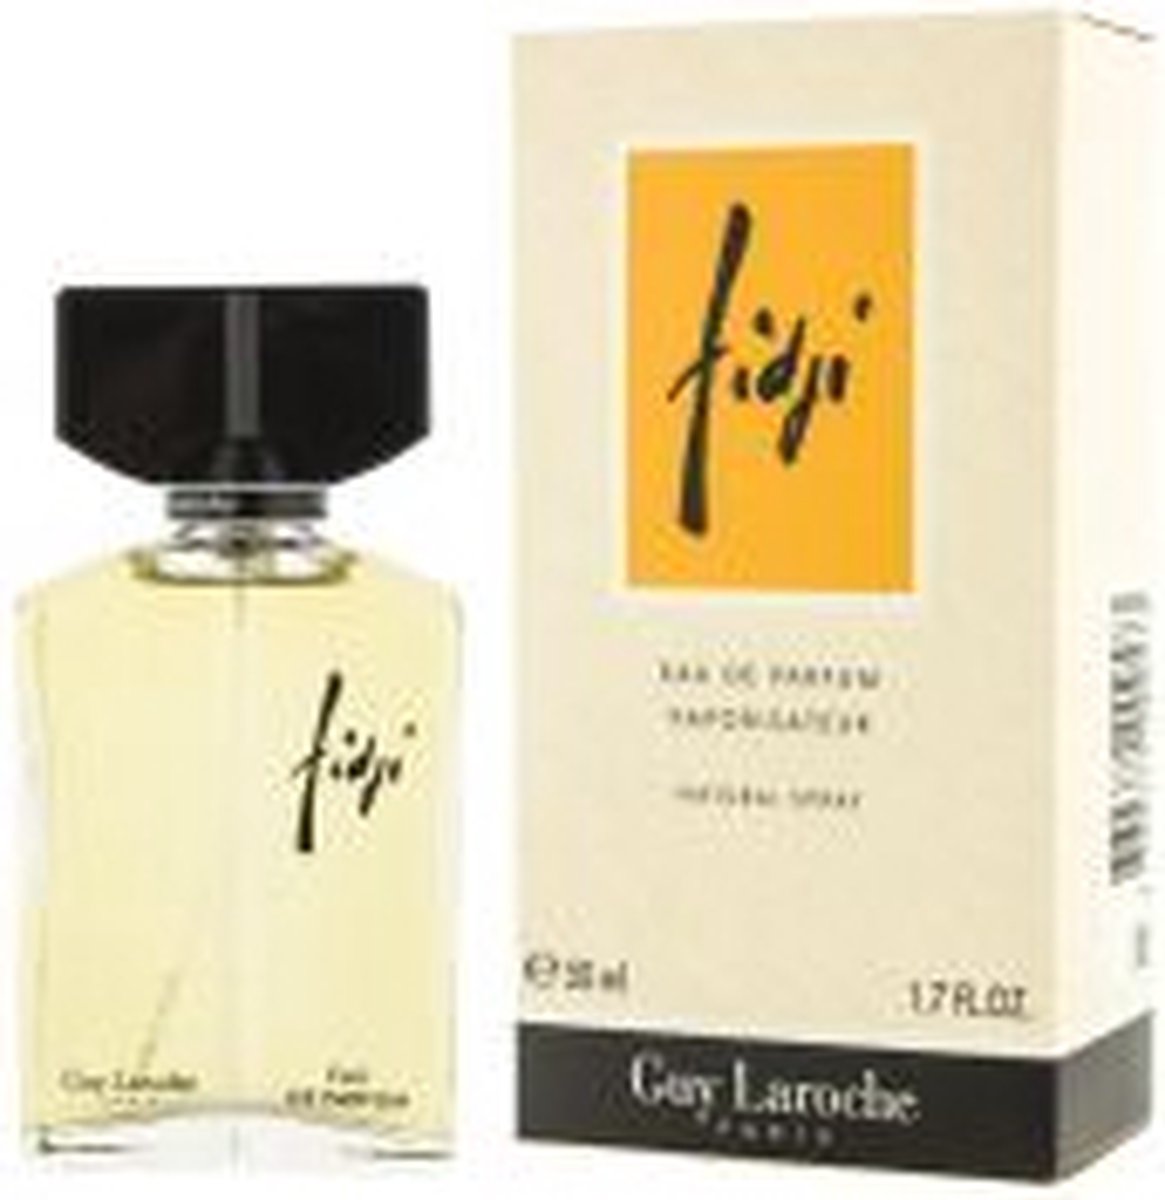 Guy Laroche Fidji - 50ml - Eau De Parfum | bol